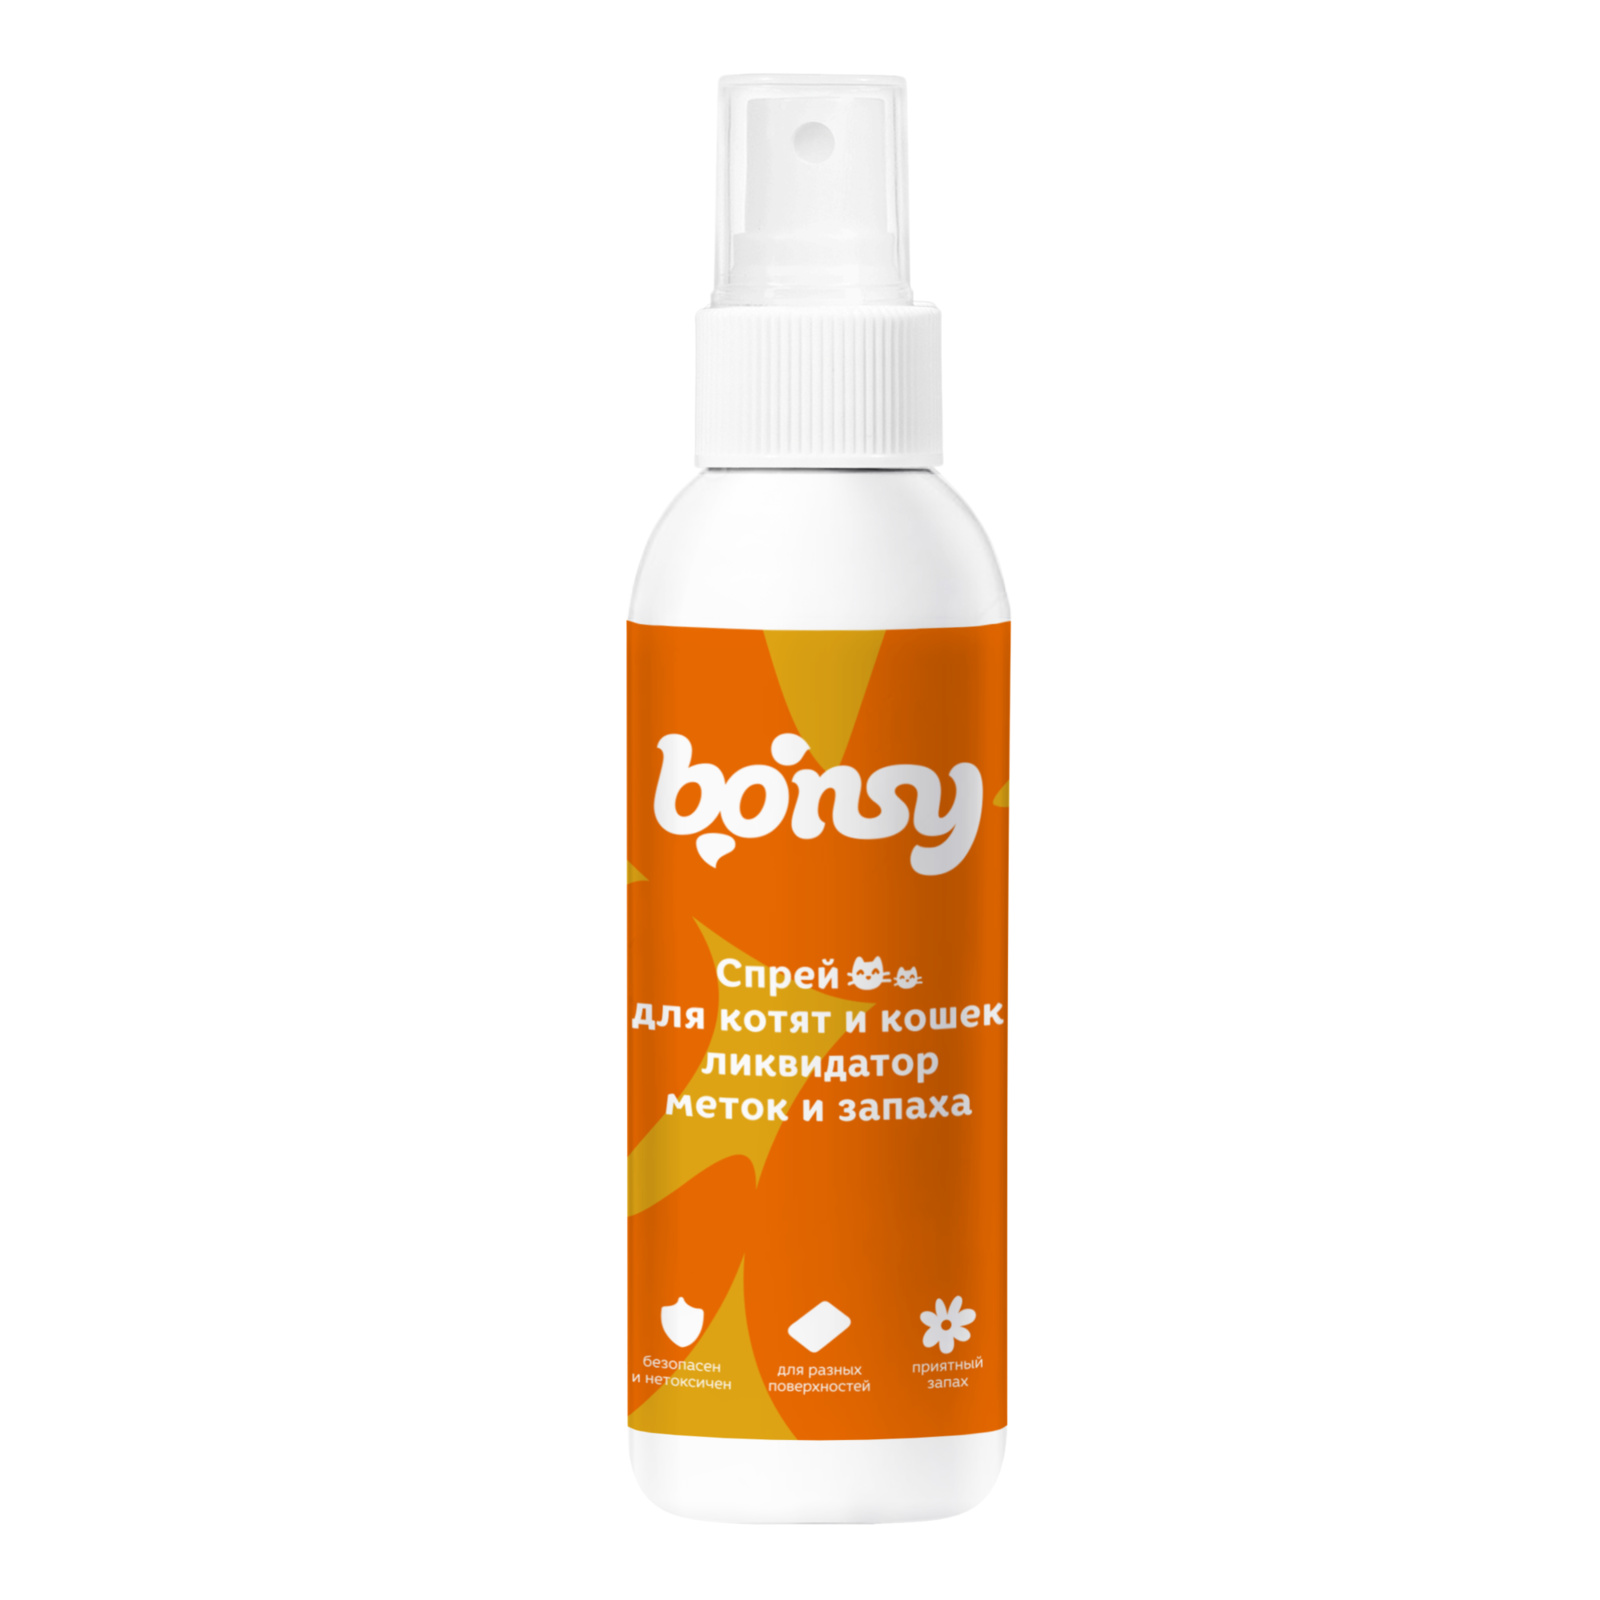 Bonsy Bonsy спрей «Ликвидатор меток и запаха» для кошек и котят (150 г) bonsy bonsy антипаразитарный биоспрей для обработки котят и кошек 150 г